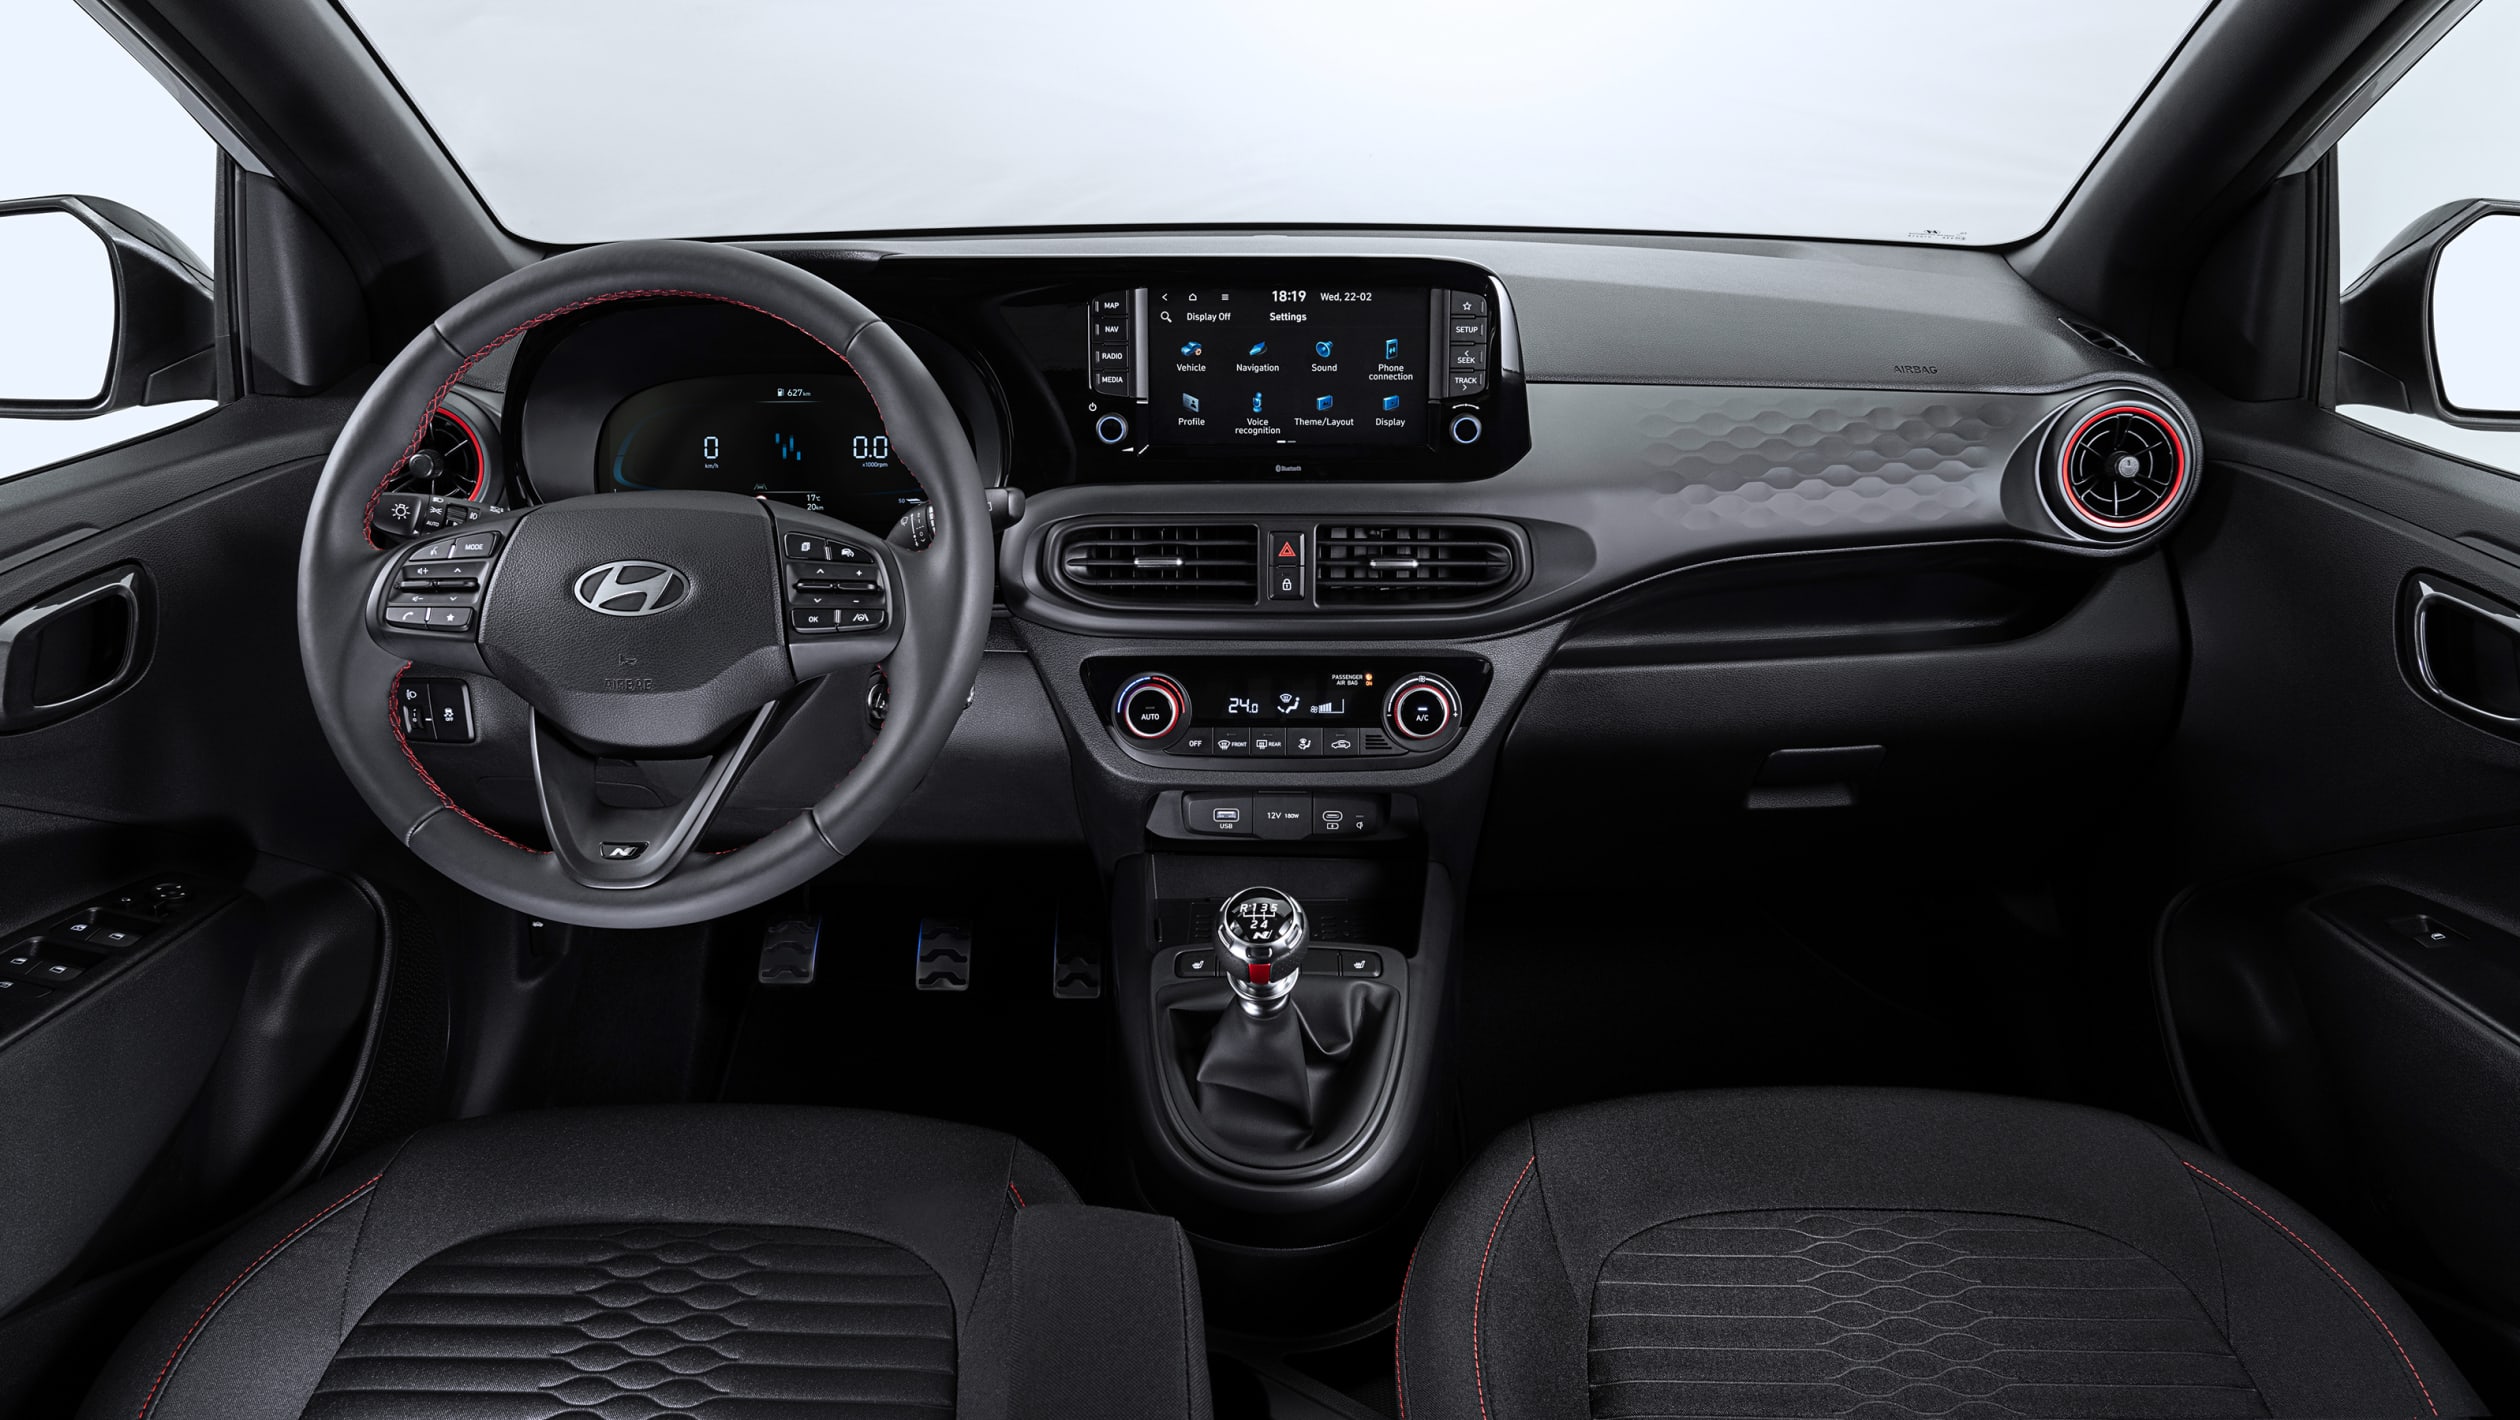 Facelifted Hyundai i10 N-Line - interior